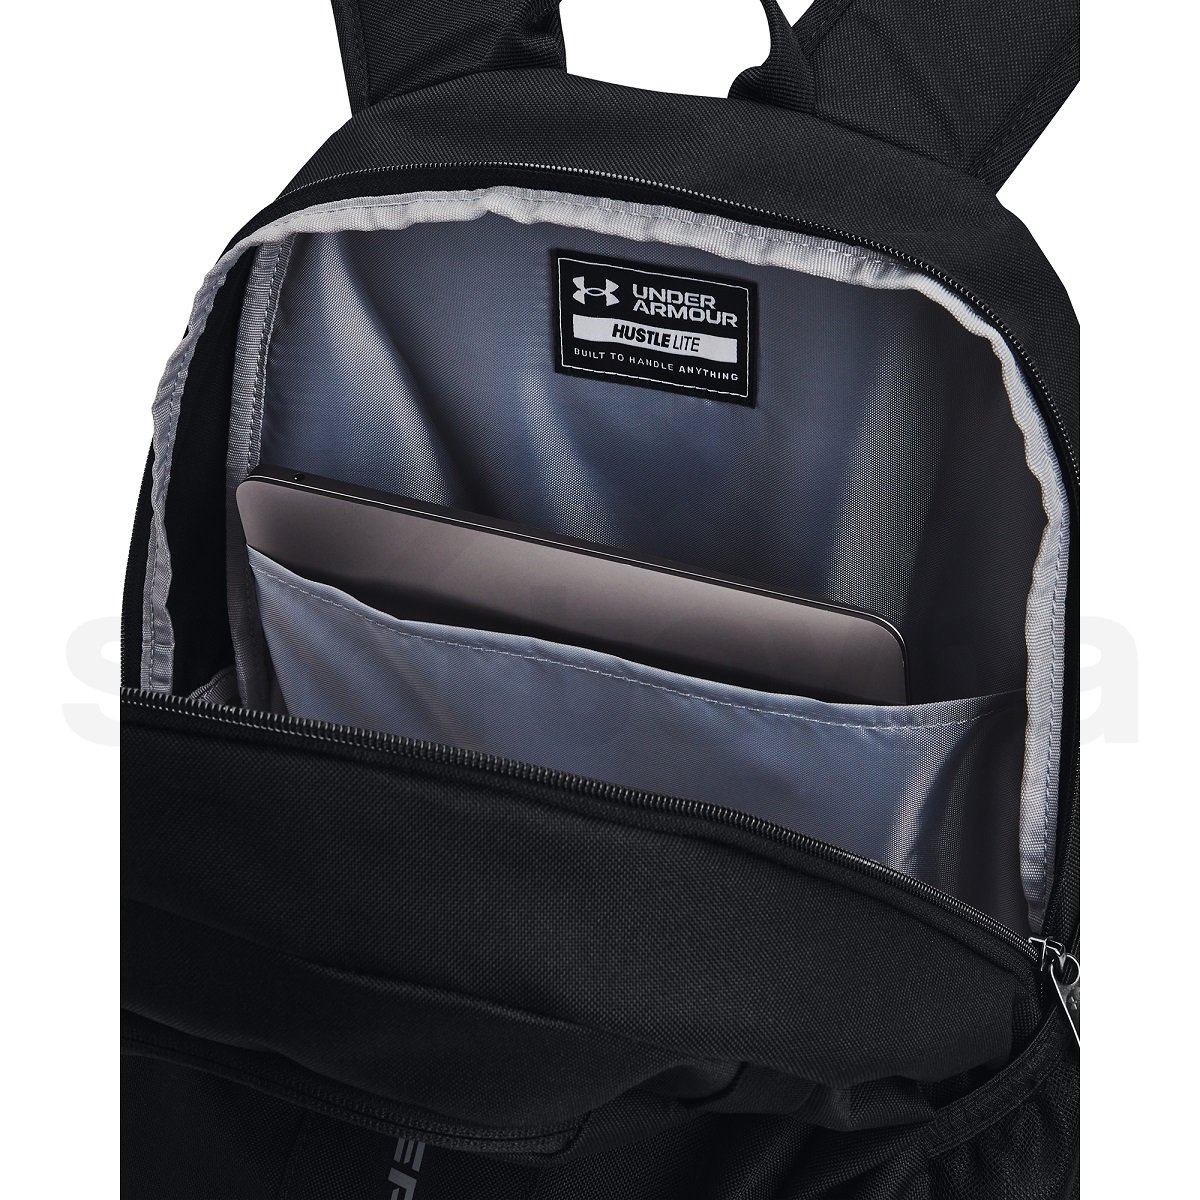 Batoh Under Armour Hustle Lite Backpack - černá